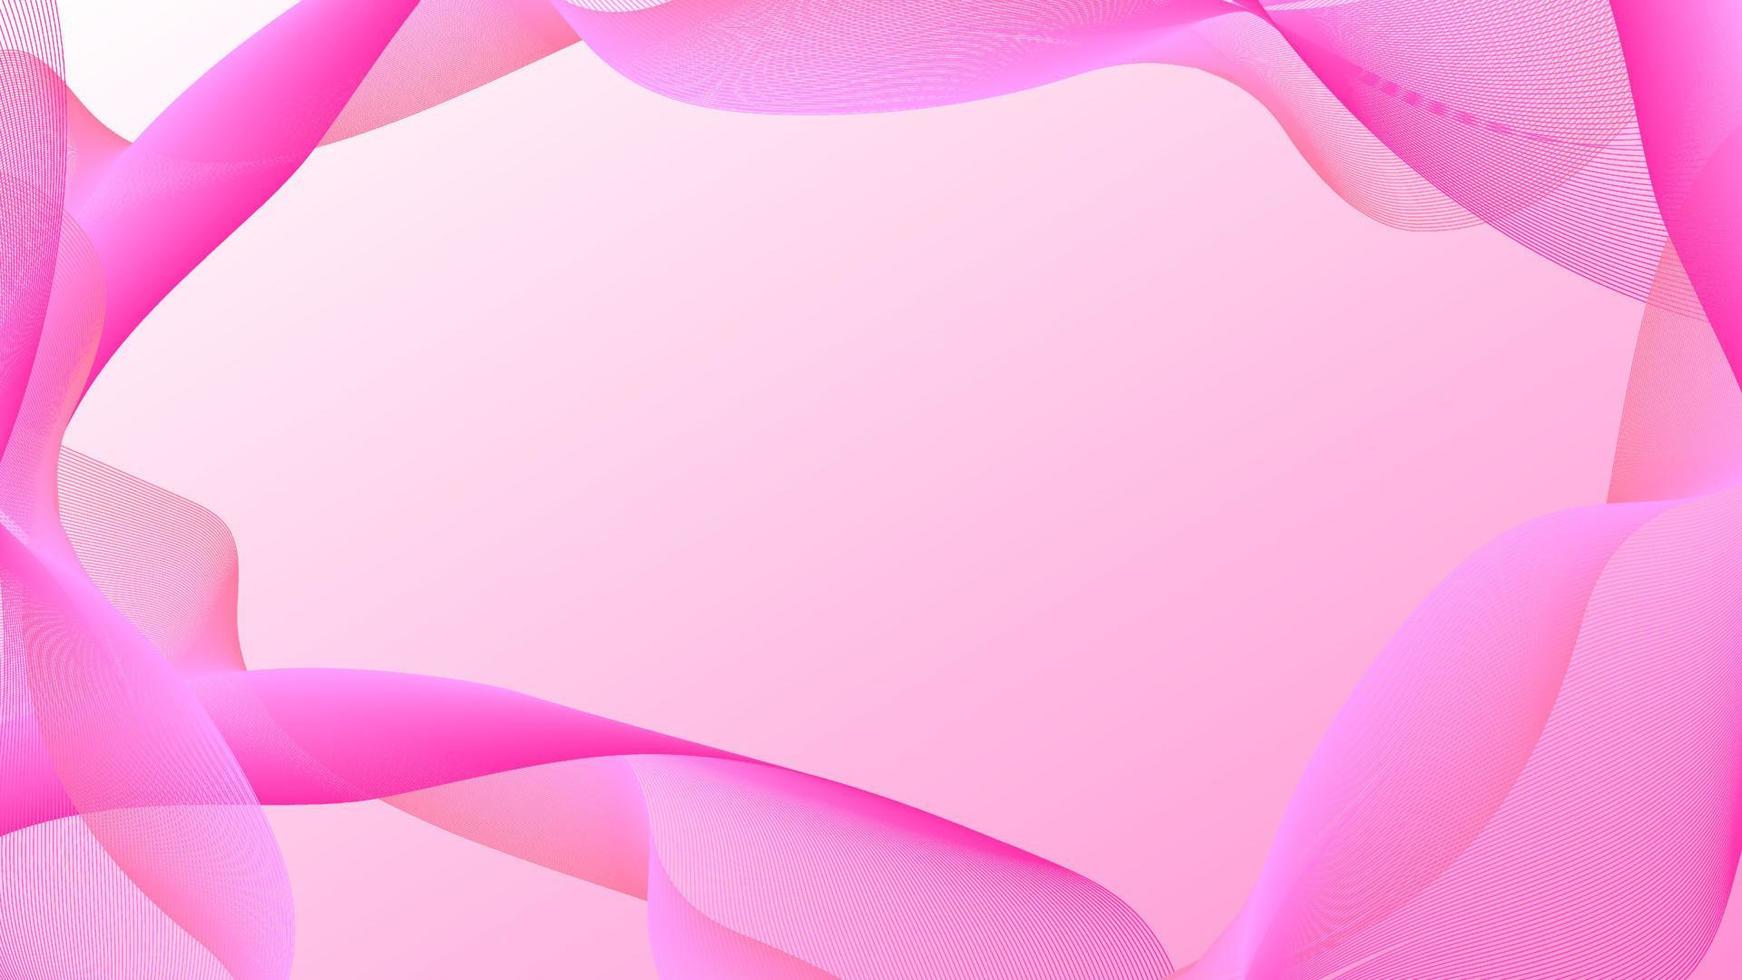 fondo abstracto rosa suave con formas onduladas. vector de fondo degradado rosa.